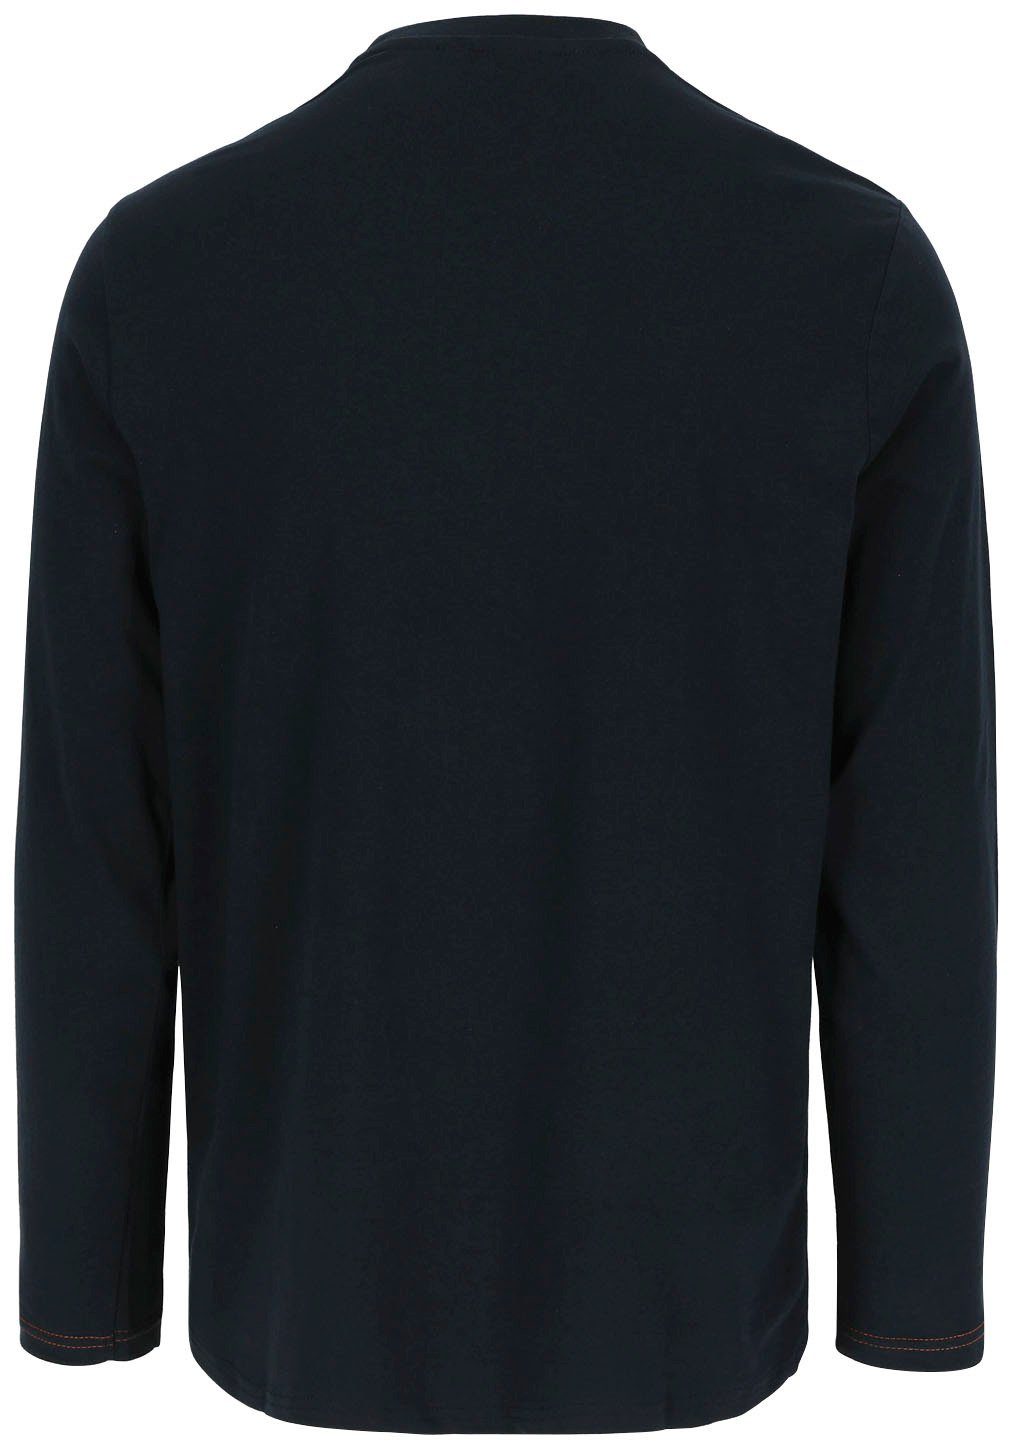 Herock Langarmshirt Noet t-shirt langärmlig 100 % Baumwolle, Tragegefühl, marine vorgeschrumpfte angenehmes Basic